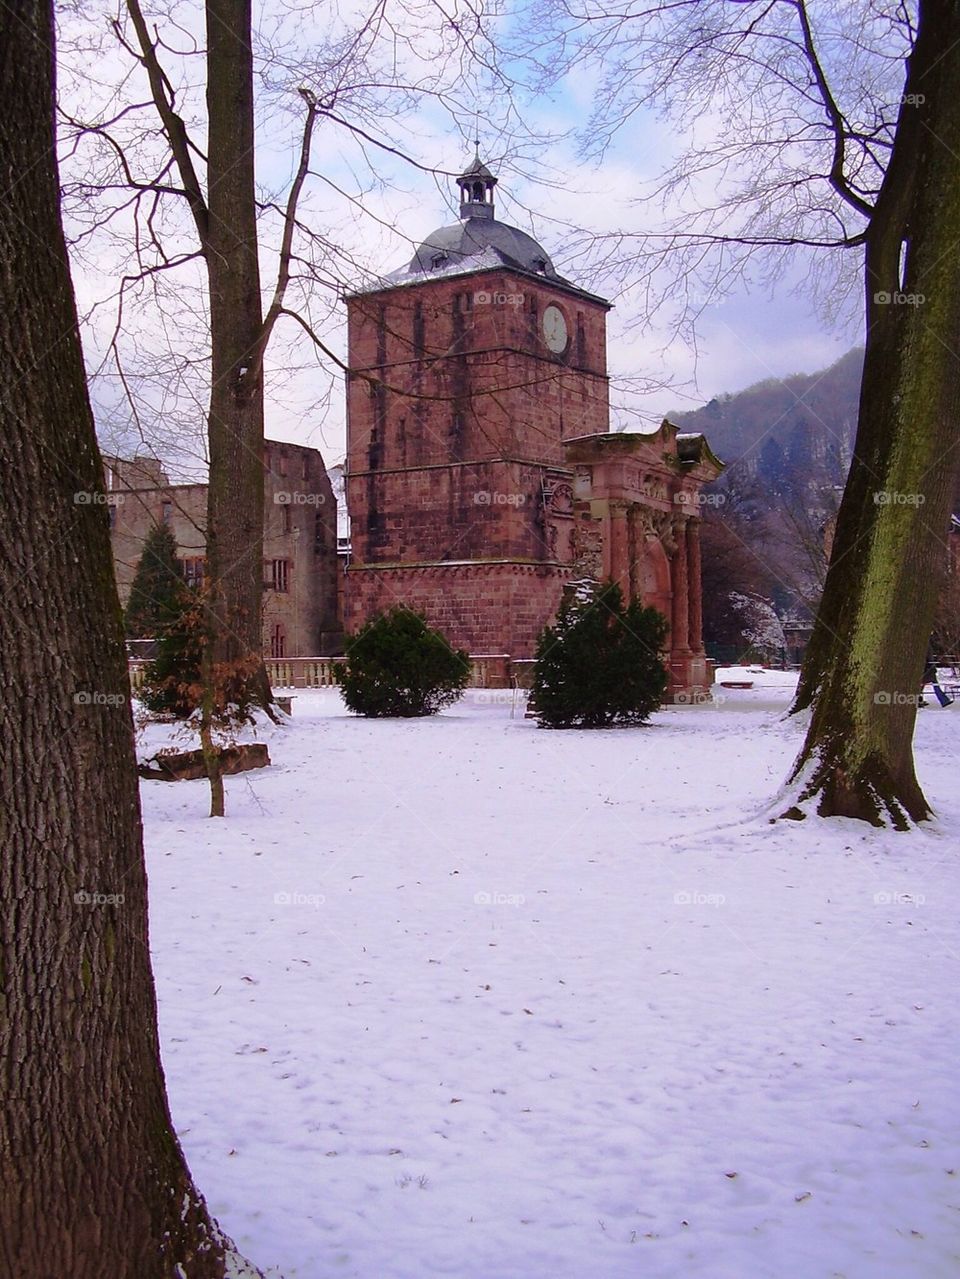 Heidelberg castle